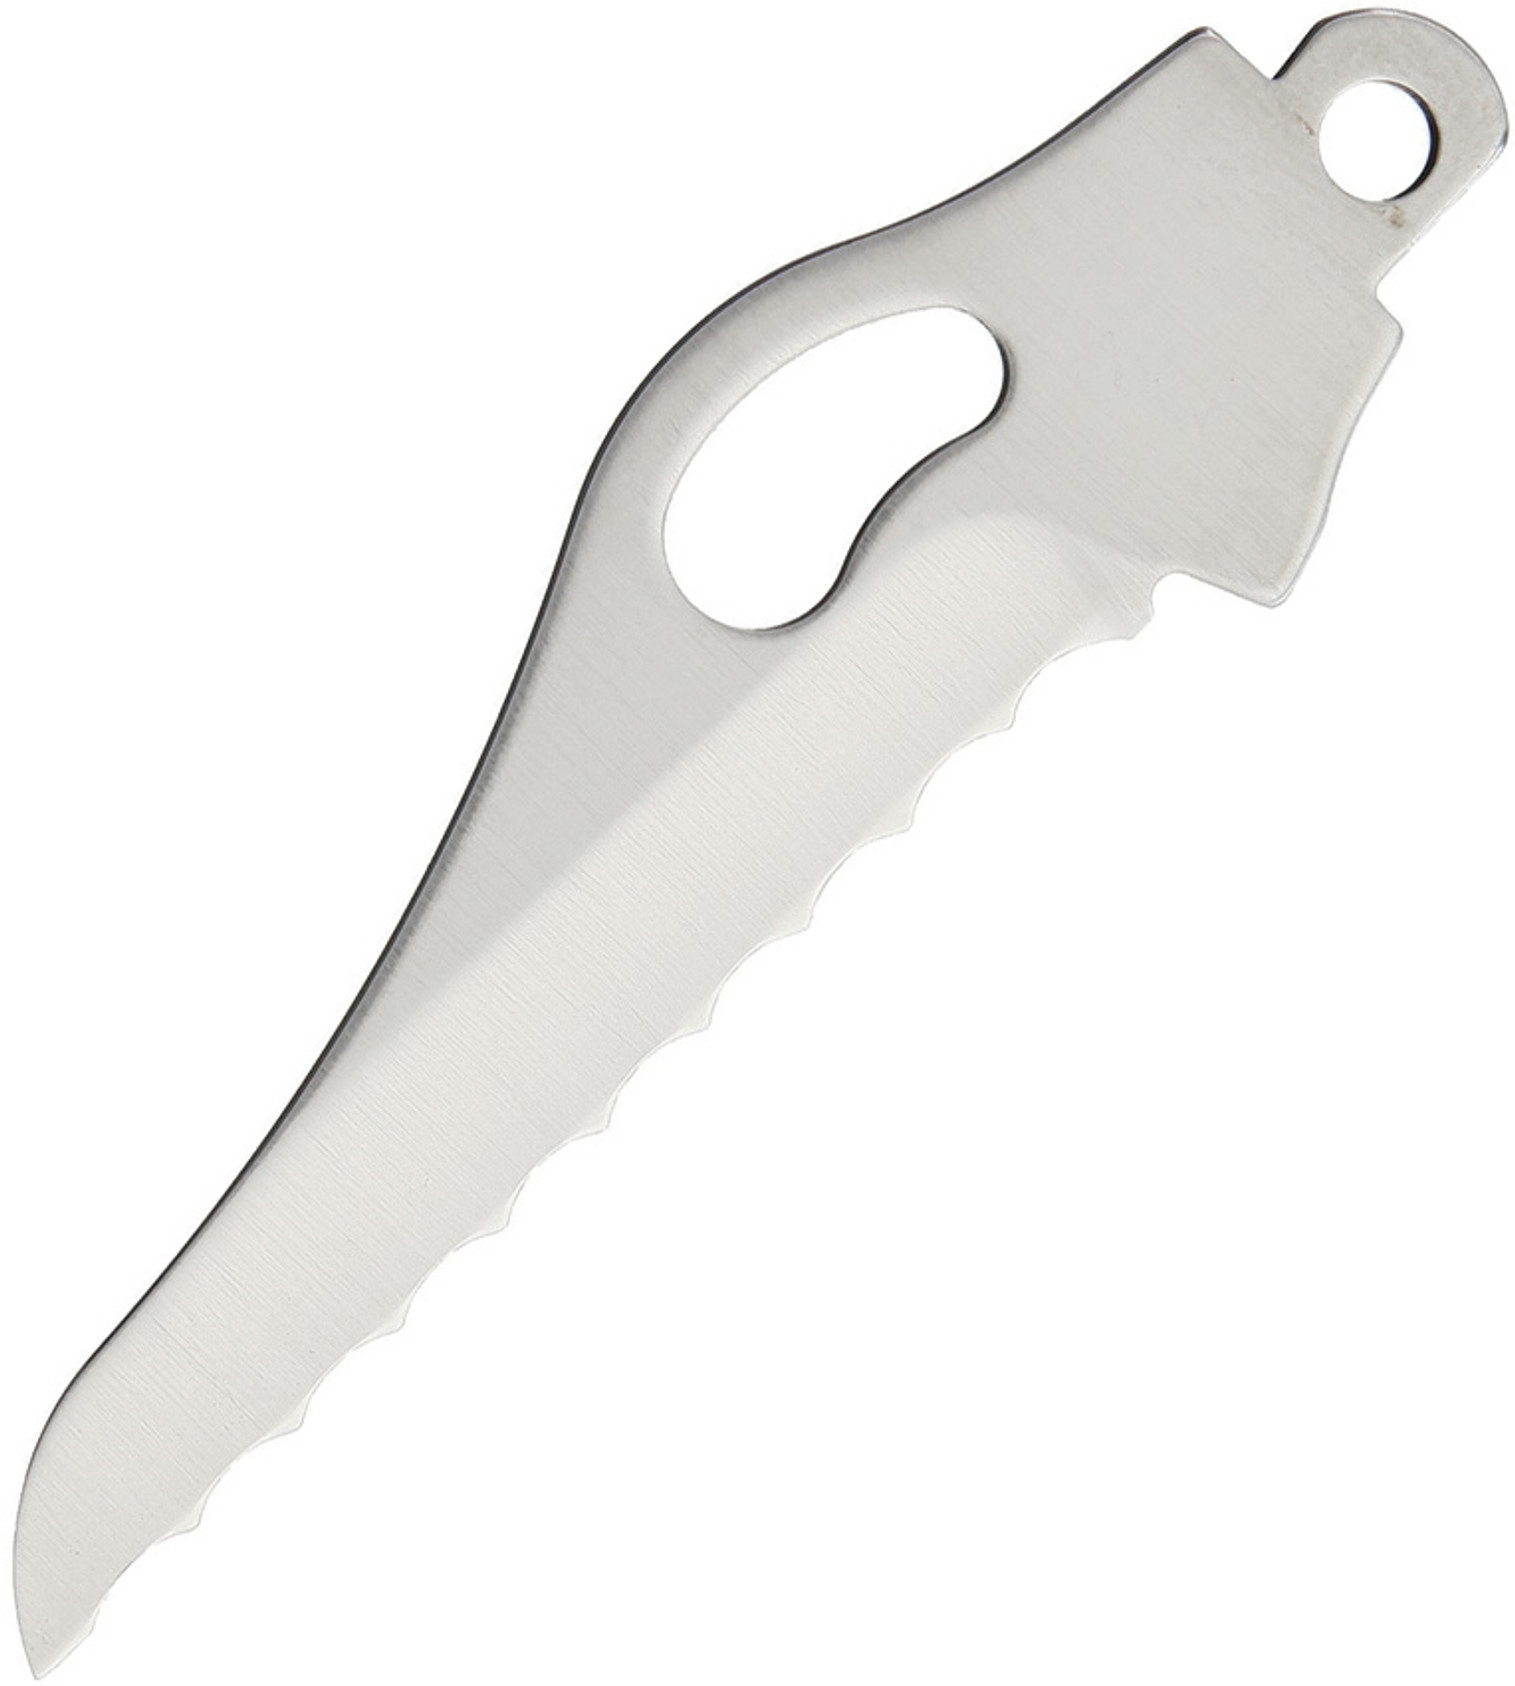 Knife Blade S691